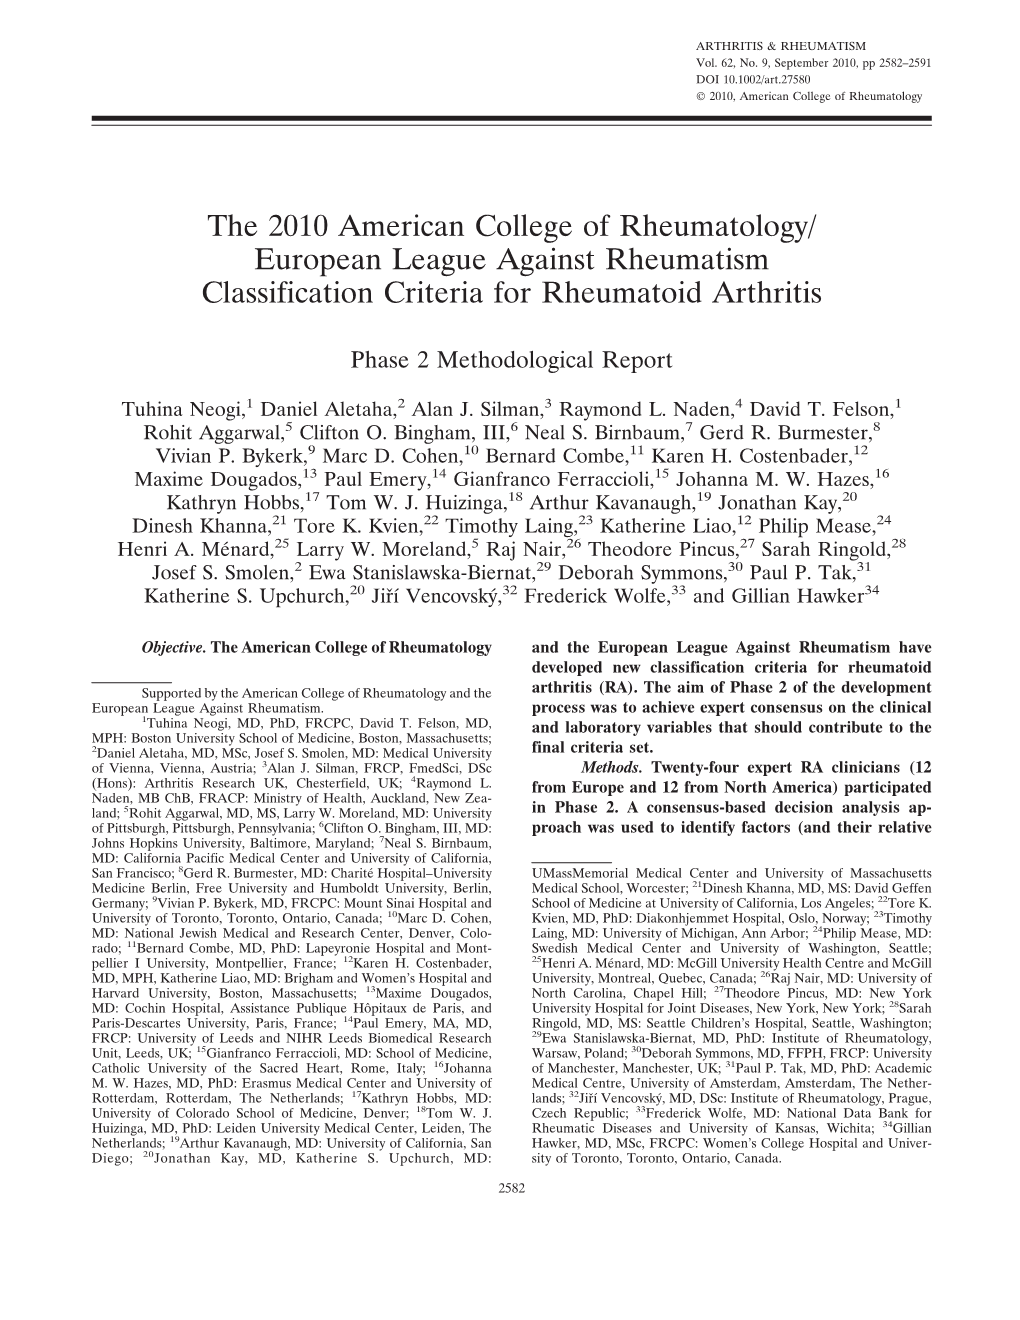 The 2010 American College of Rheumatology/European League